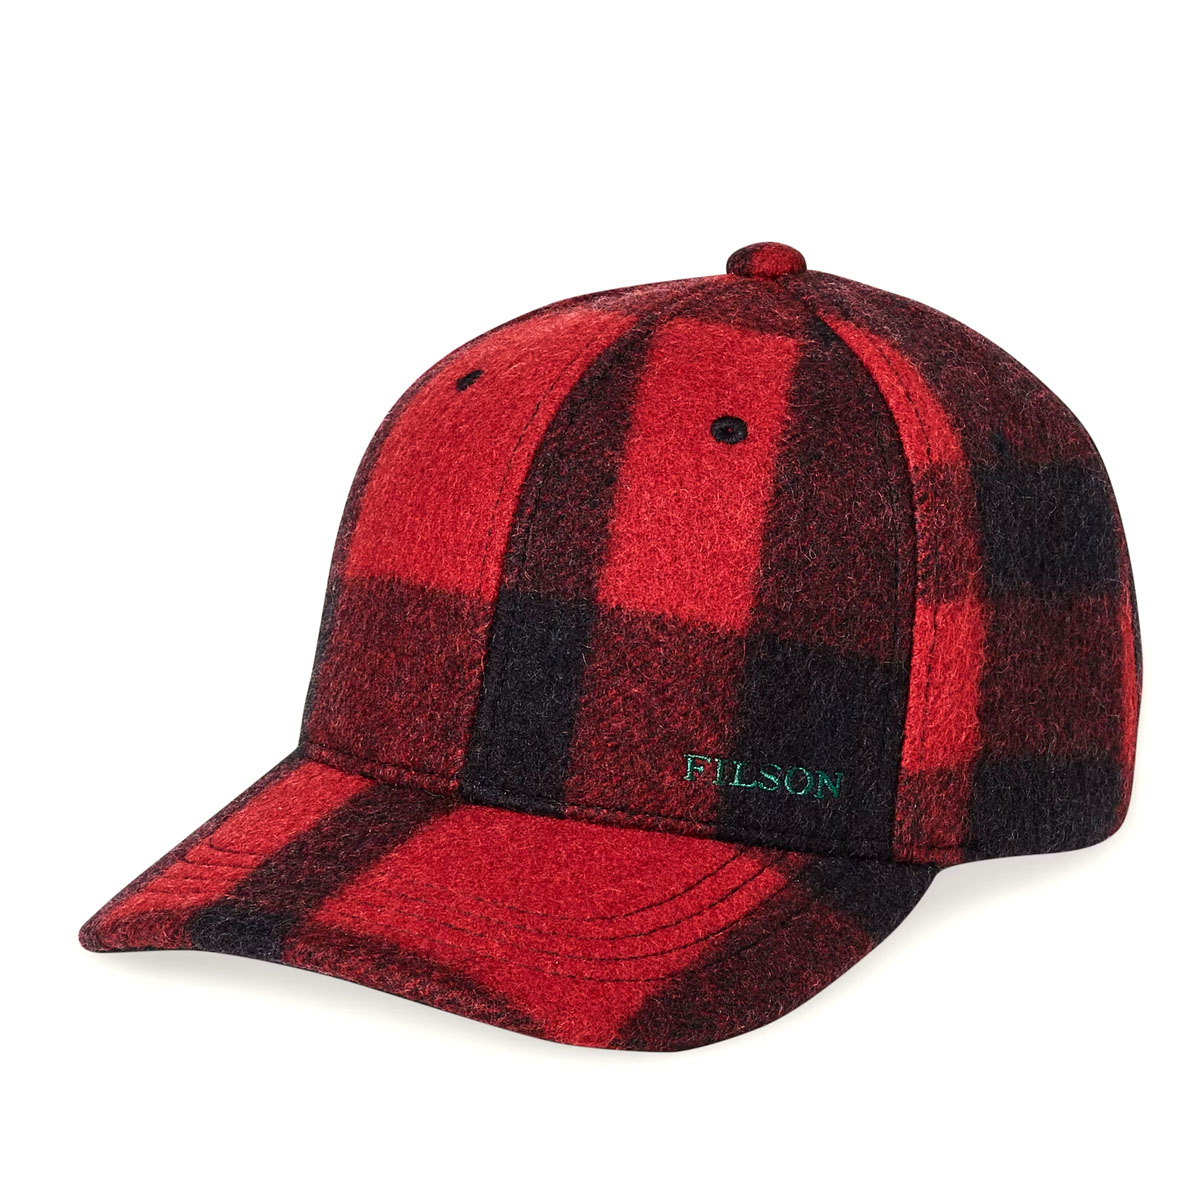 Filson Wool Logger Cap Red/Black Heritage Plaid, warme und atmungsaktive Kappe aus wetterfester Mackinaw Wool